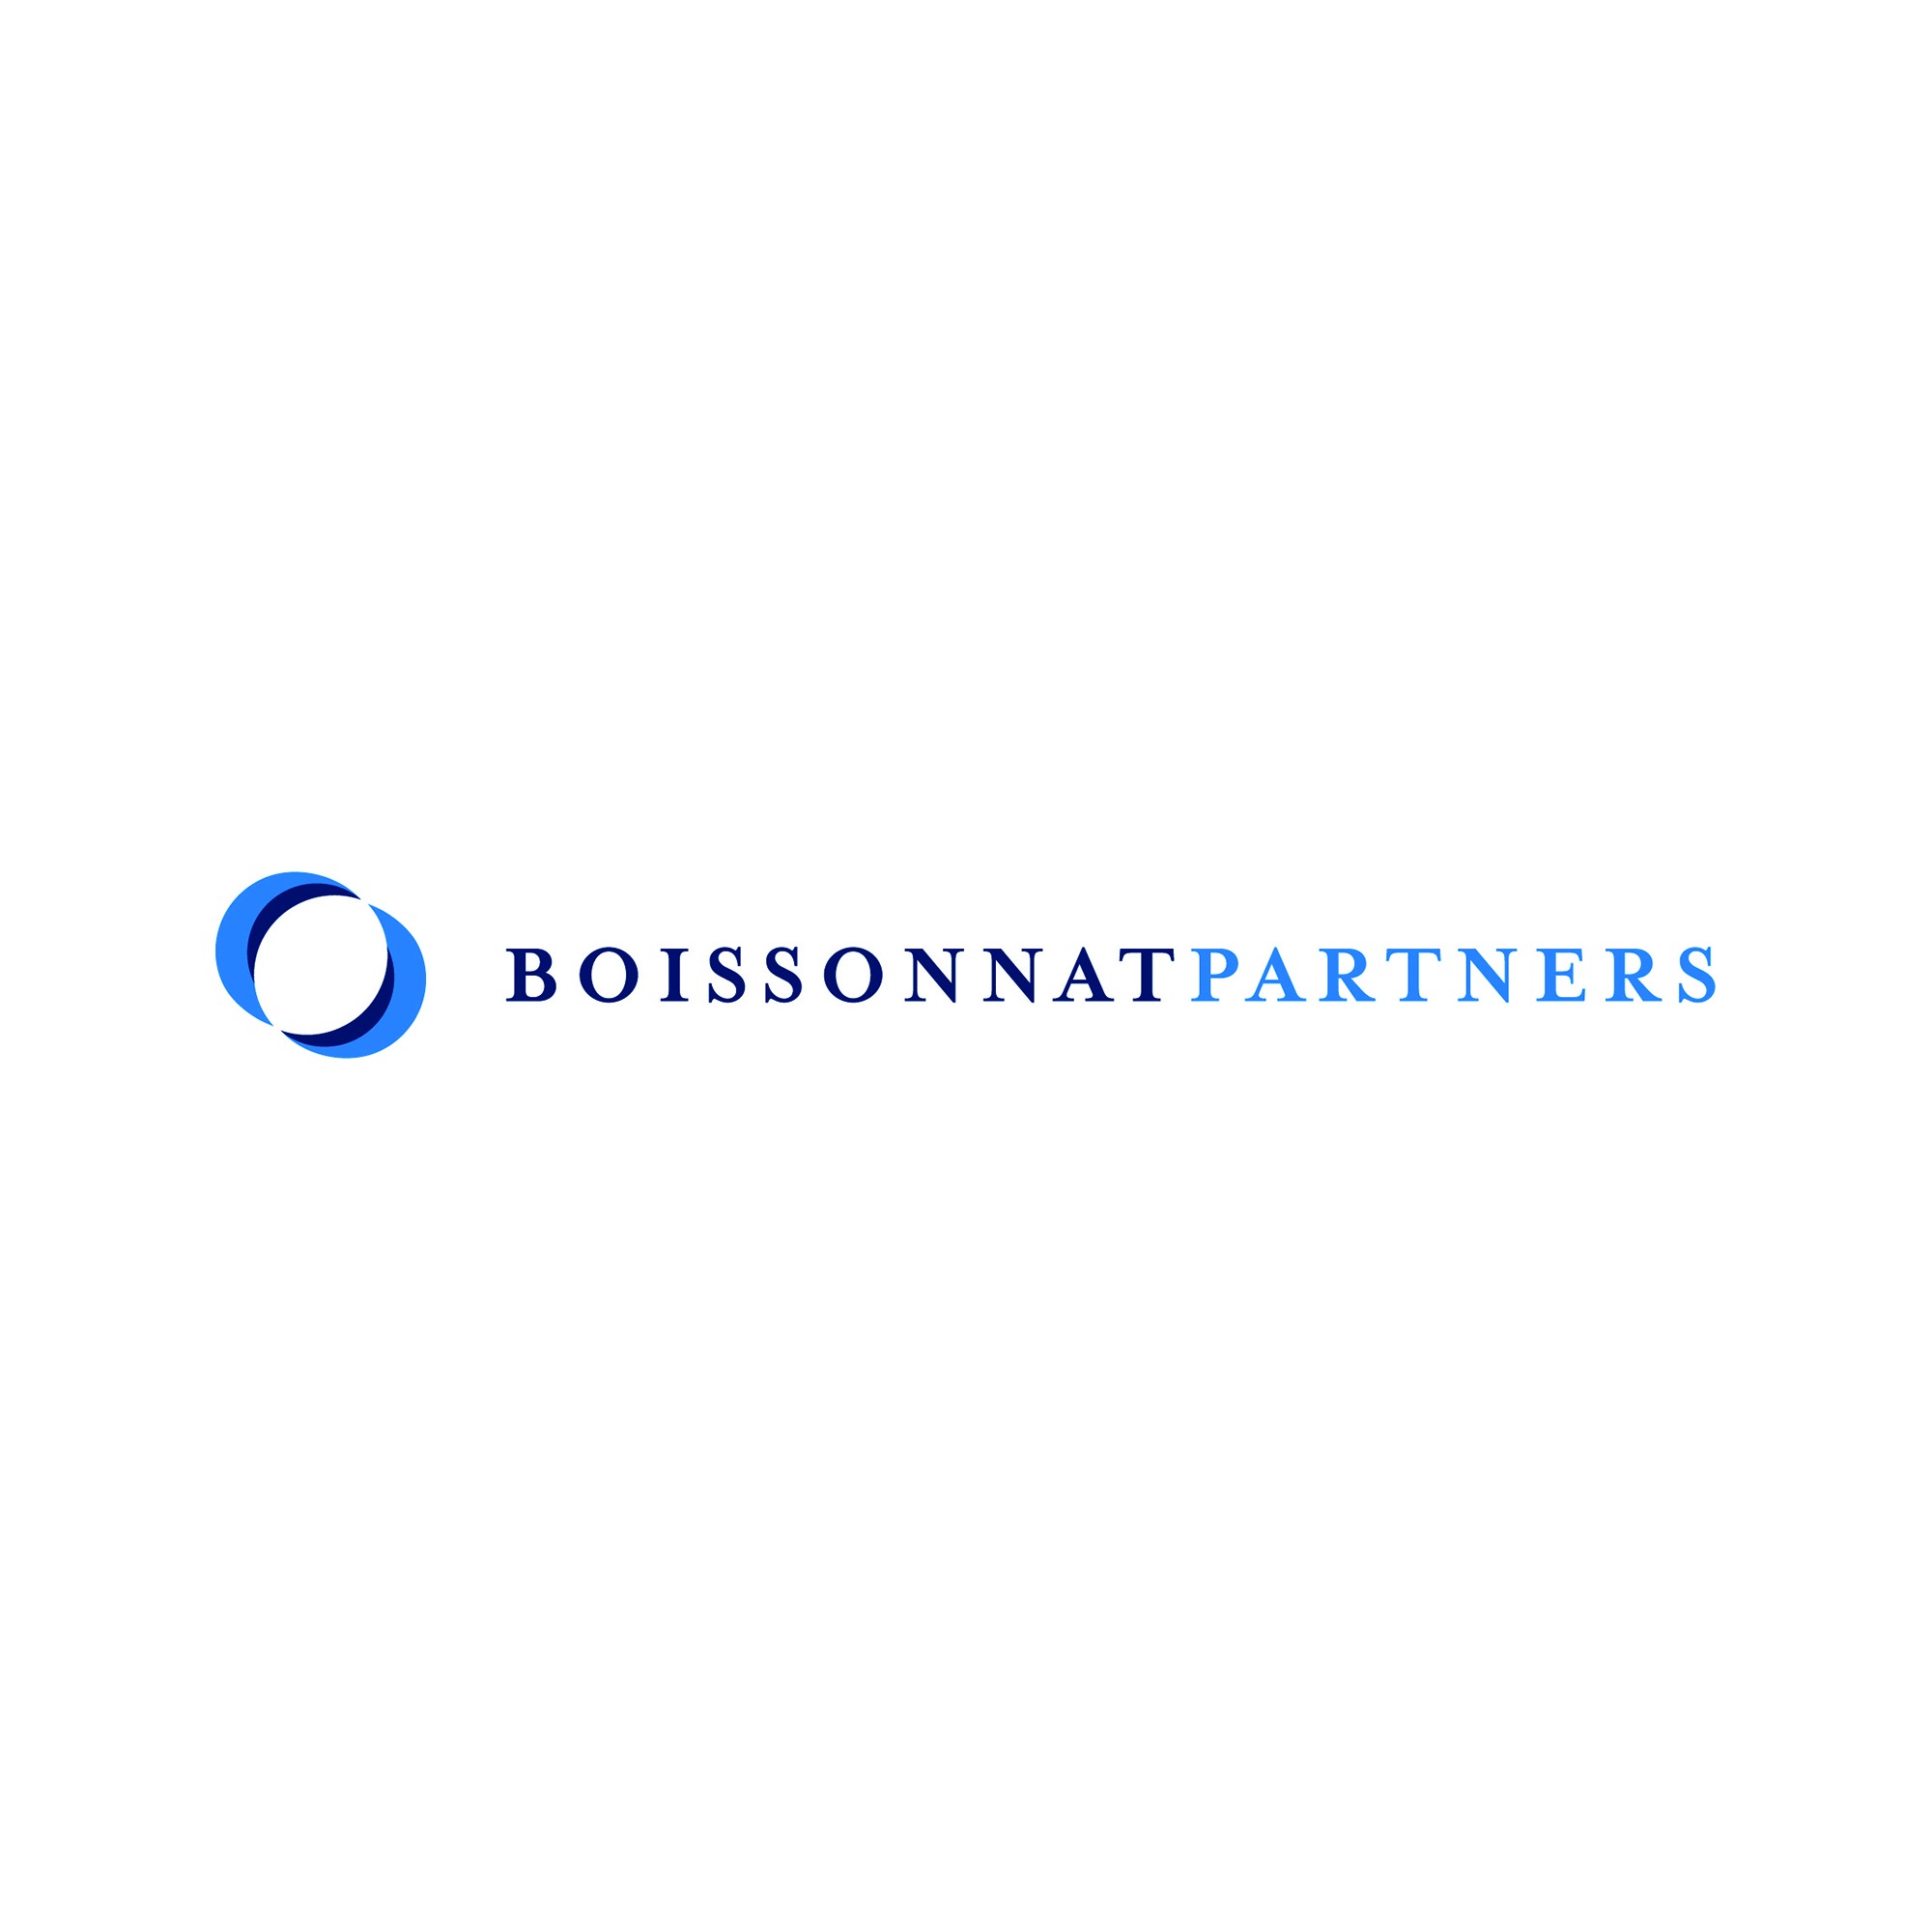 the BOISSONNAT PARTNERS logo.